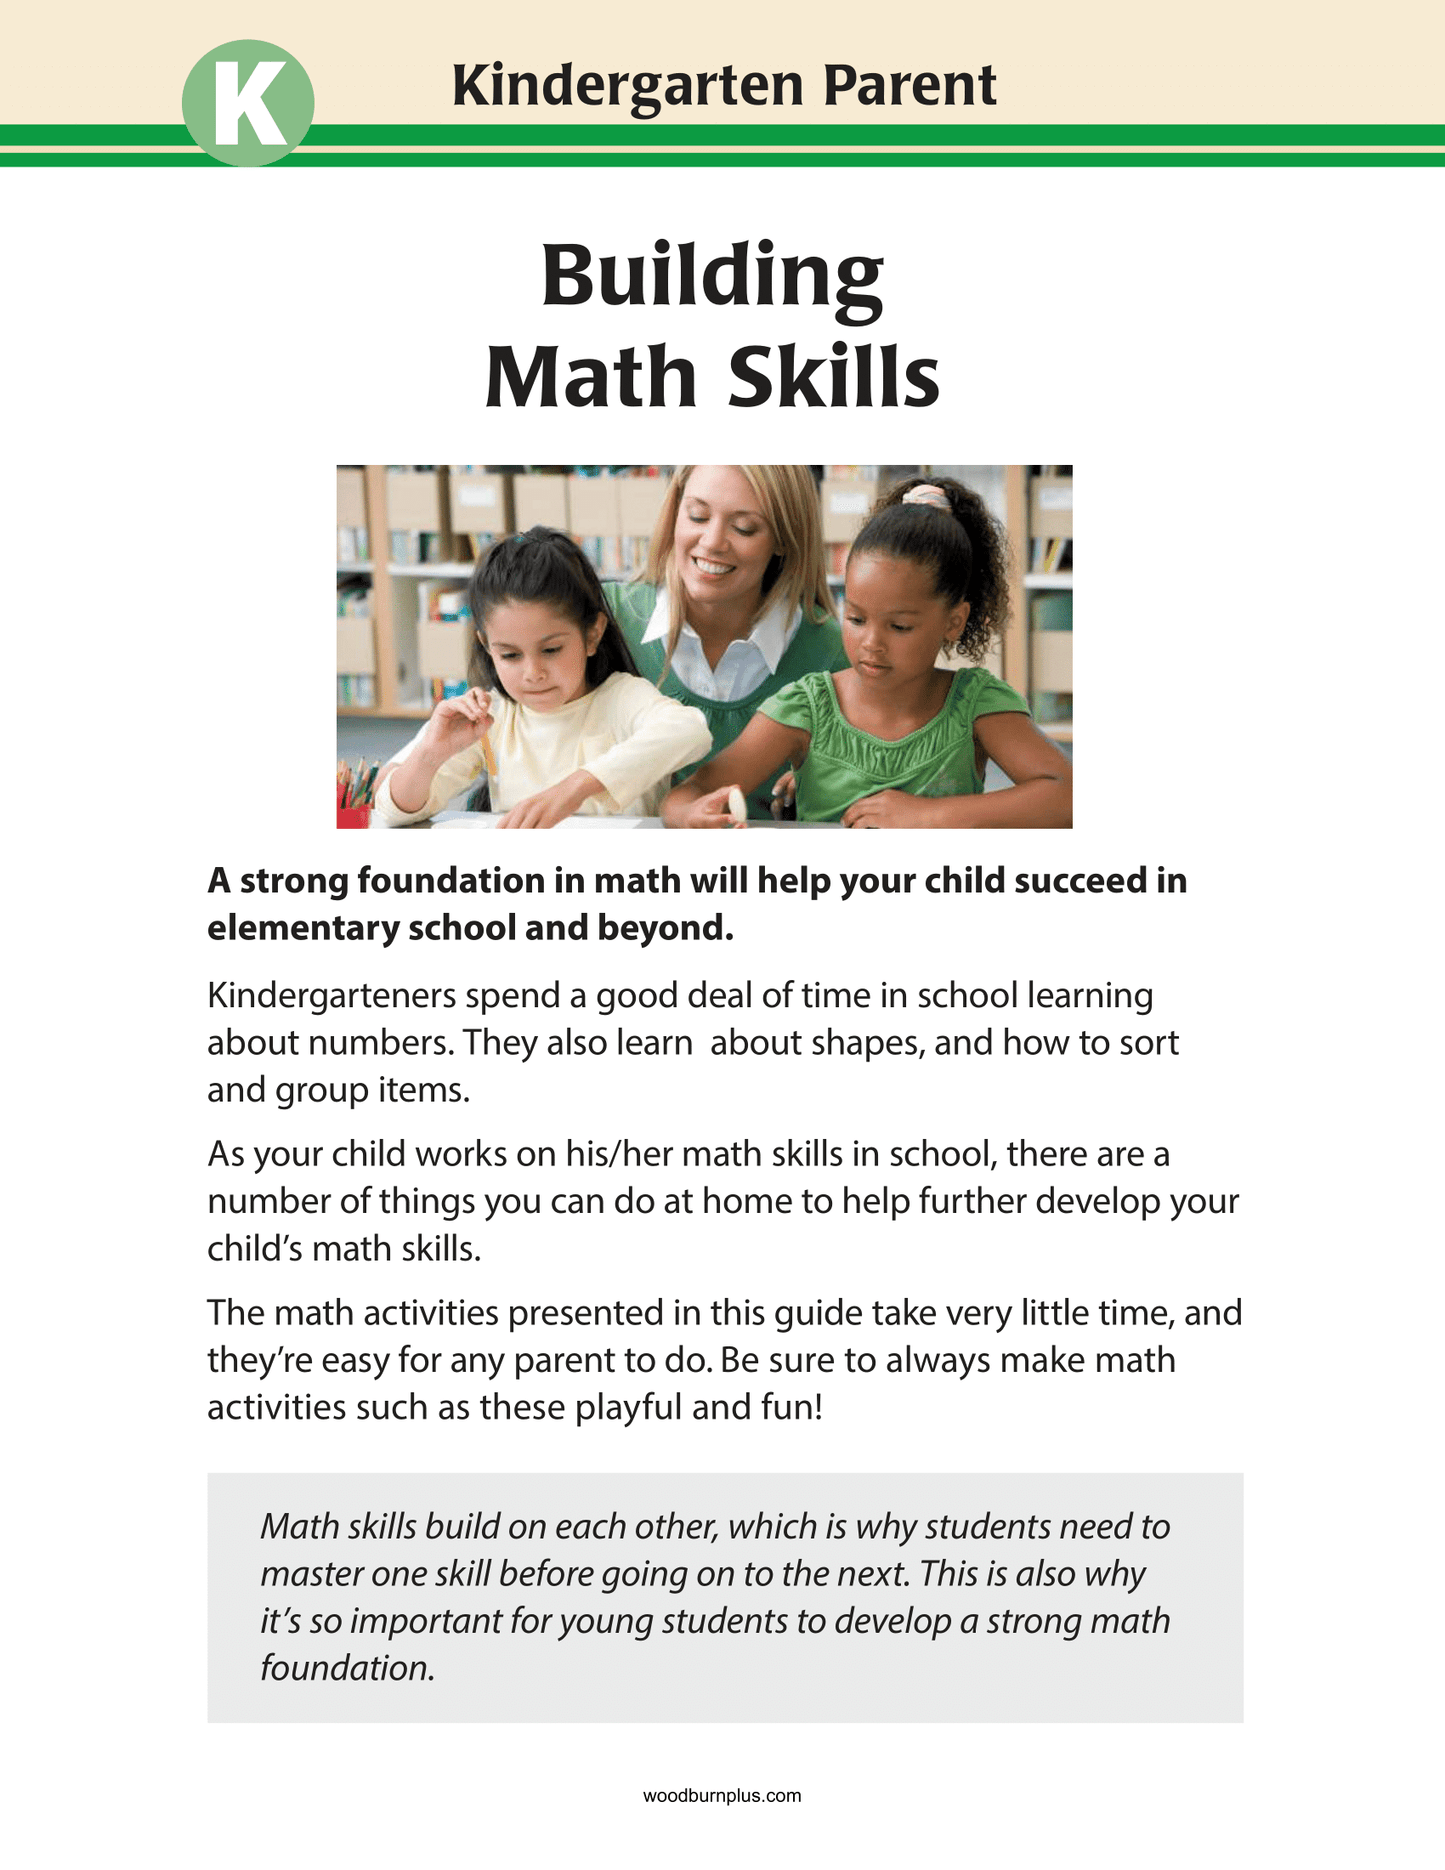 Kindergarten Parent - Building Math Skills